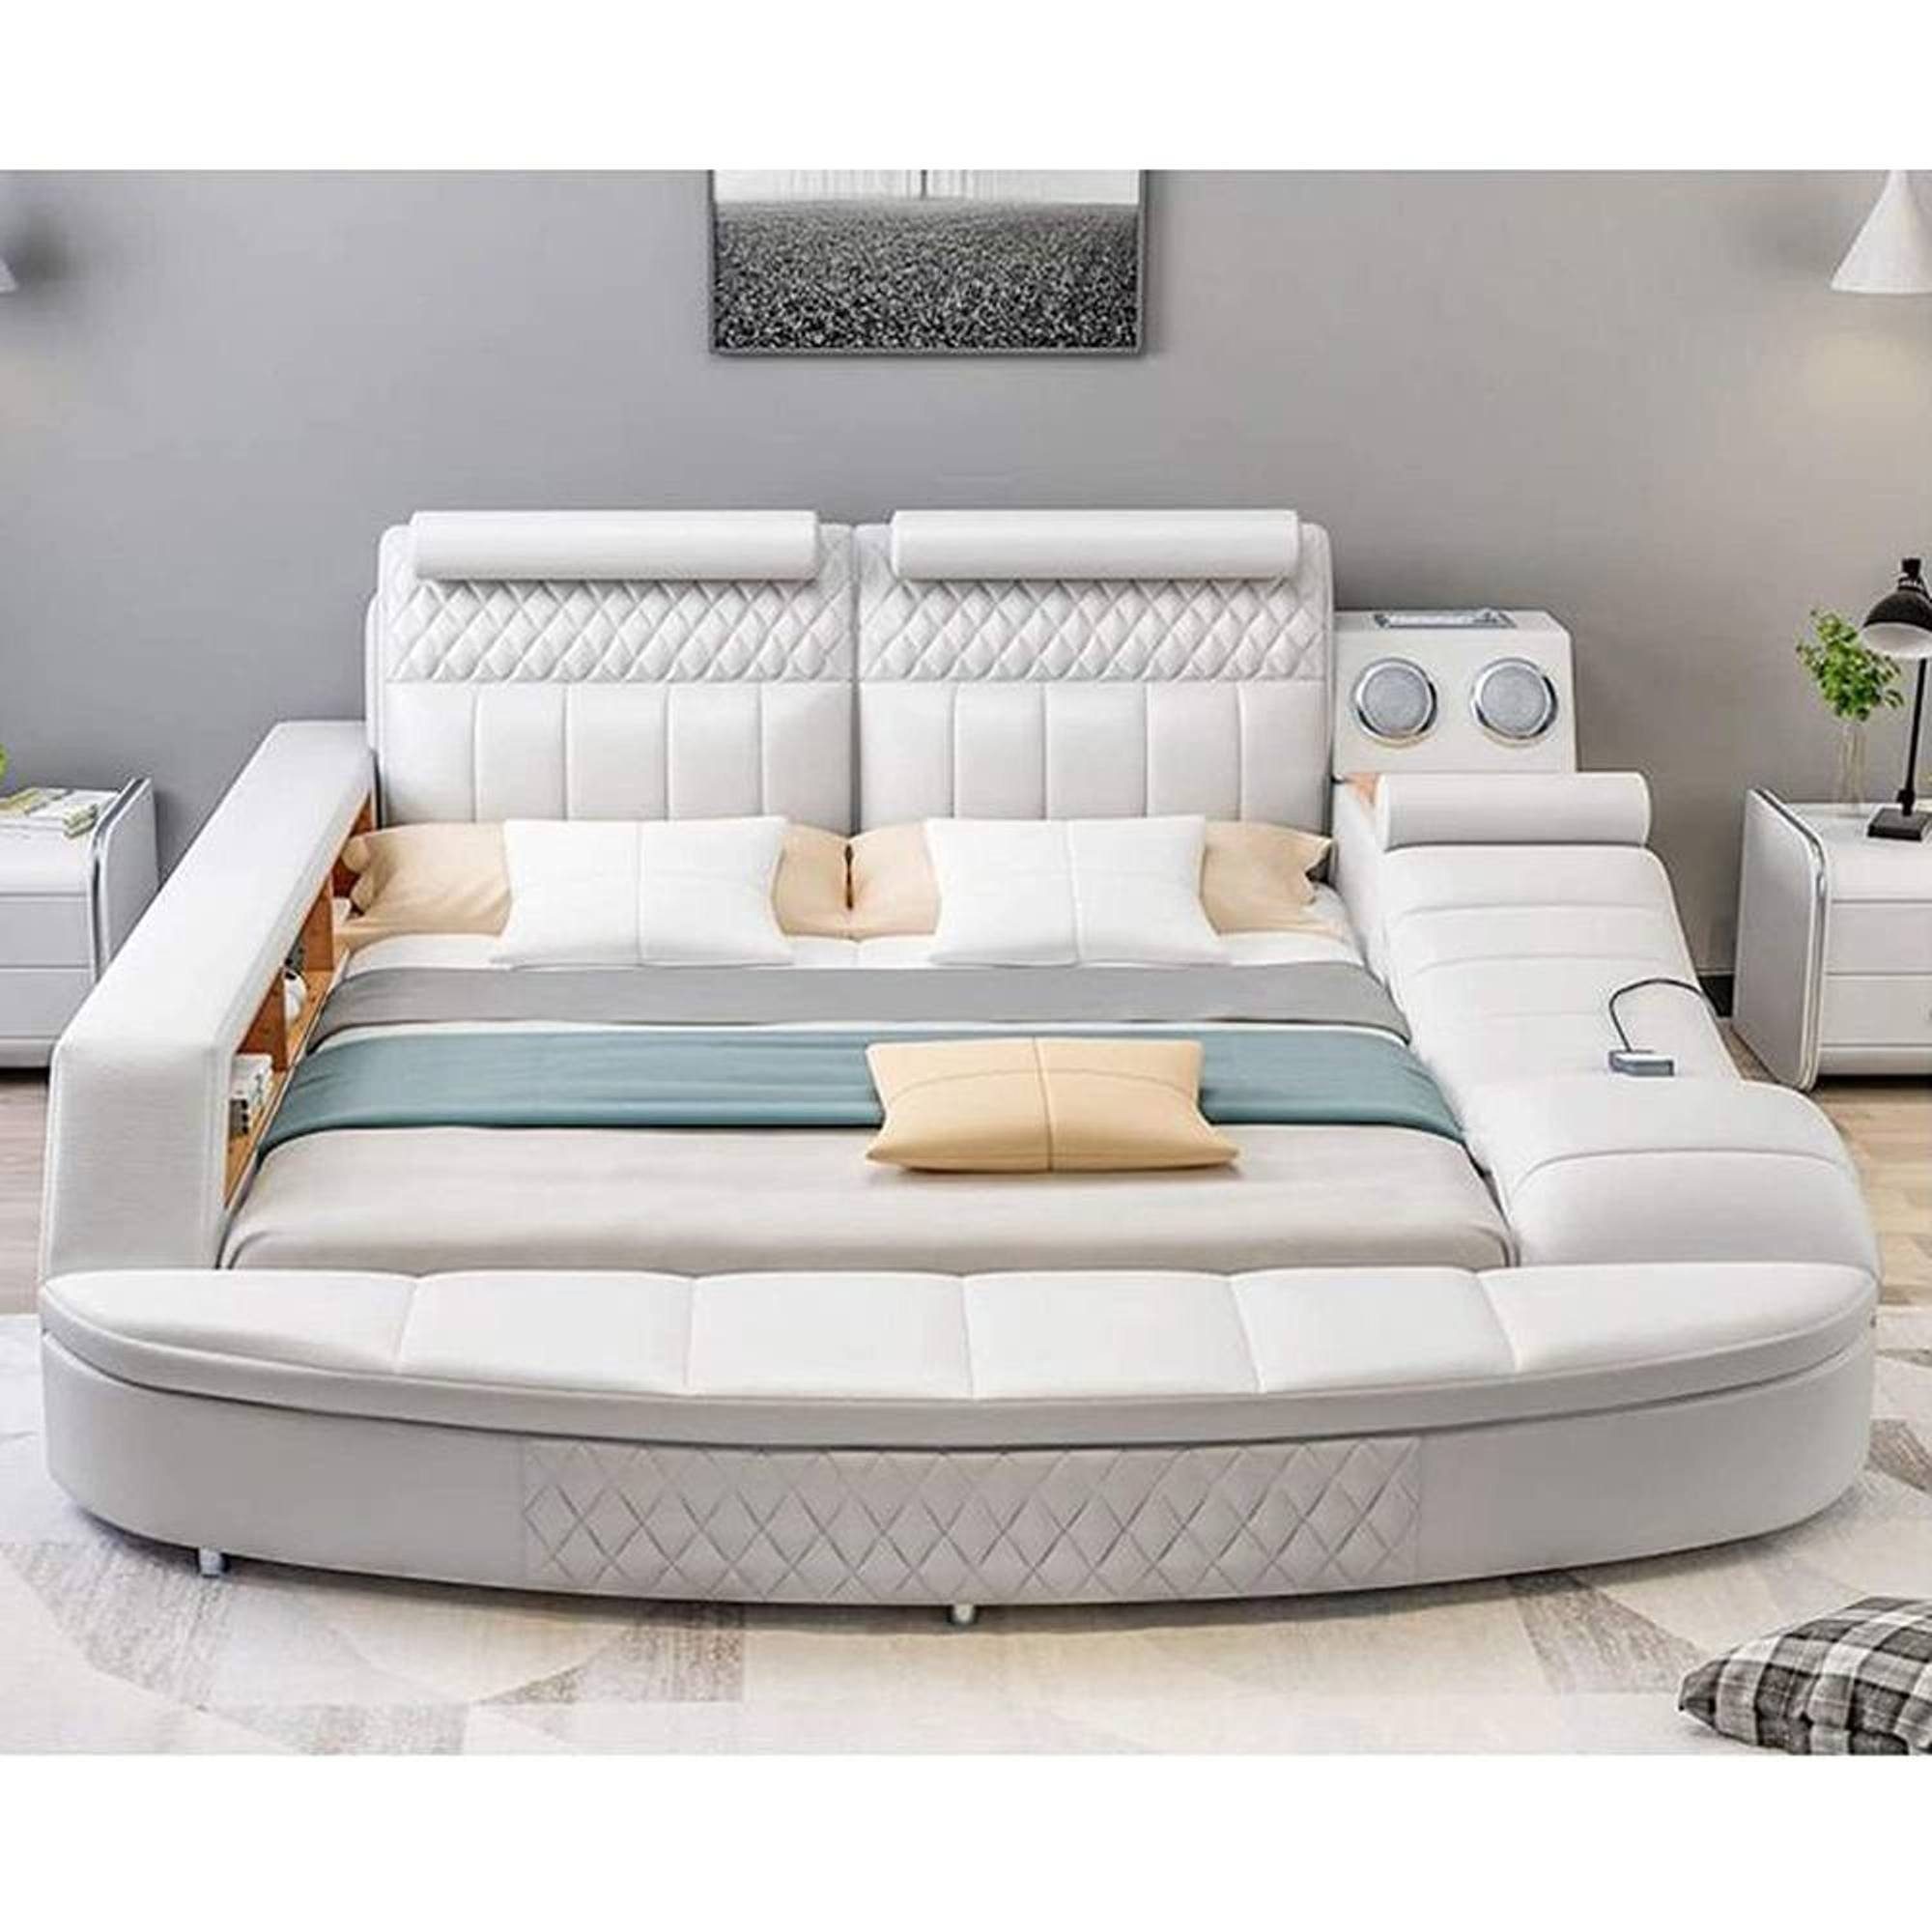 JVmoebel Bett Multifunktion Doppelbett Betten Polsterbett Weiß Ehebett Schlafzimmer